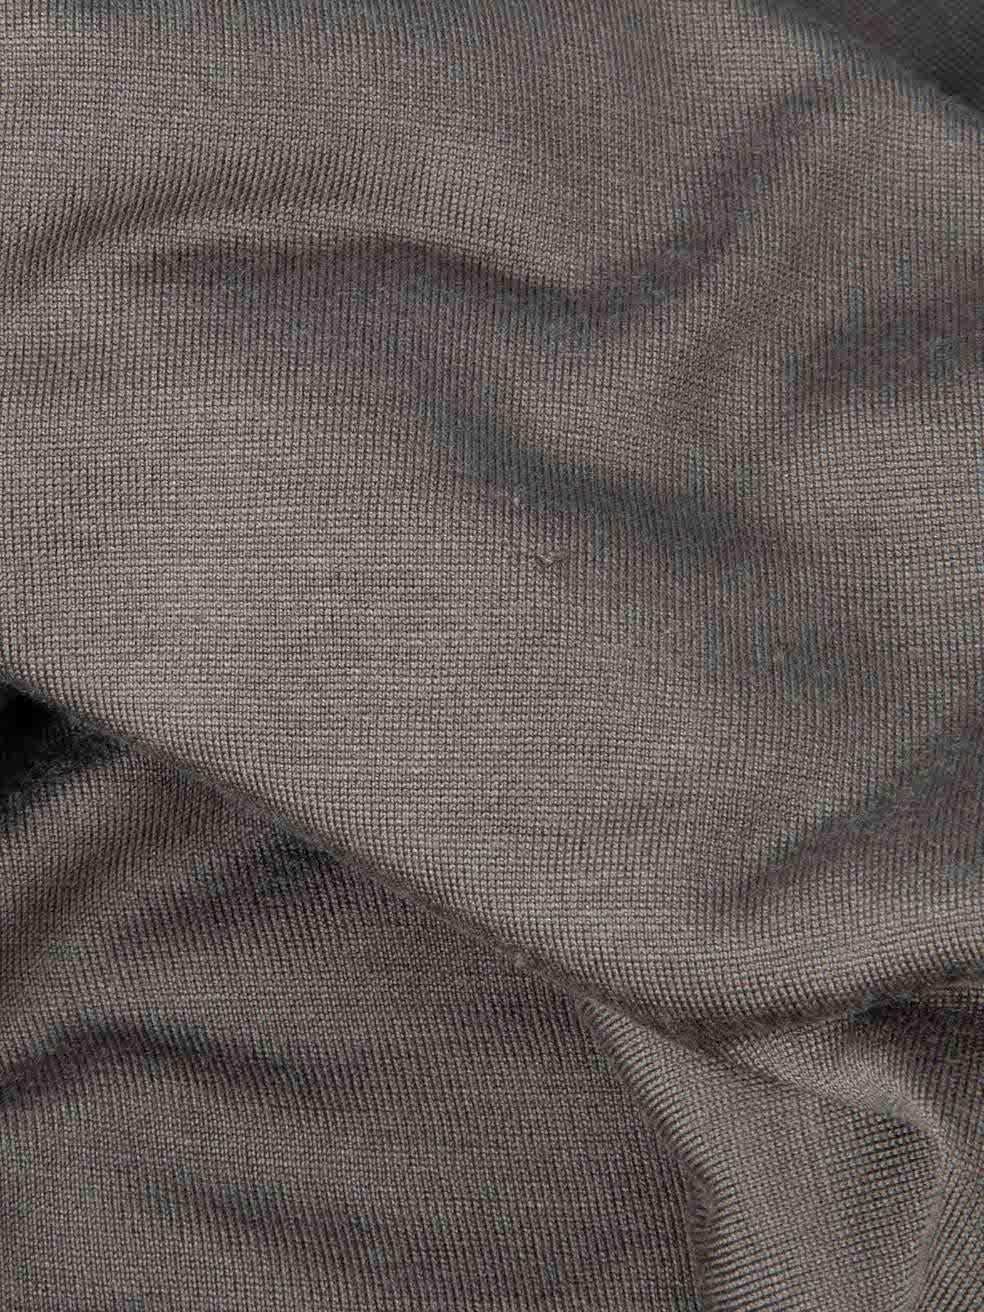 Grey Cowl Neck Knee Length Drape Dress Size S 2